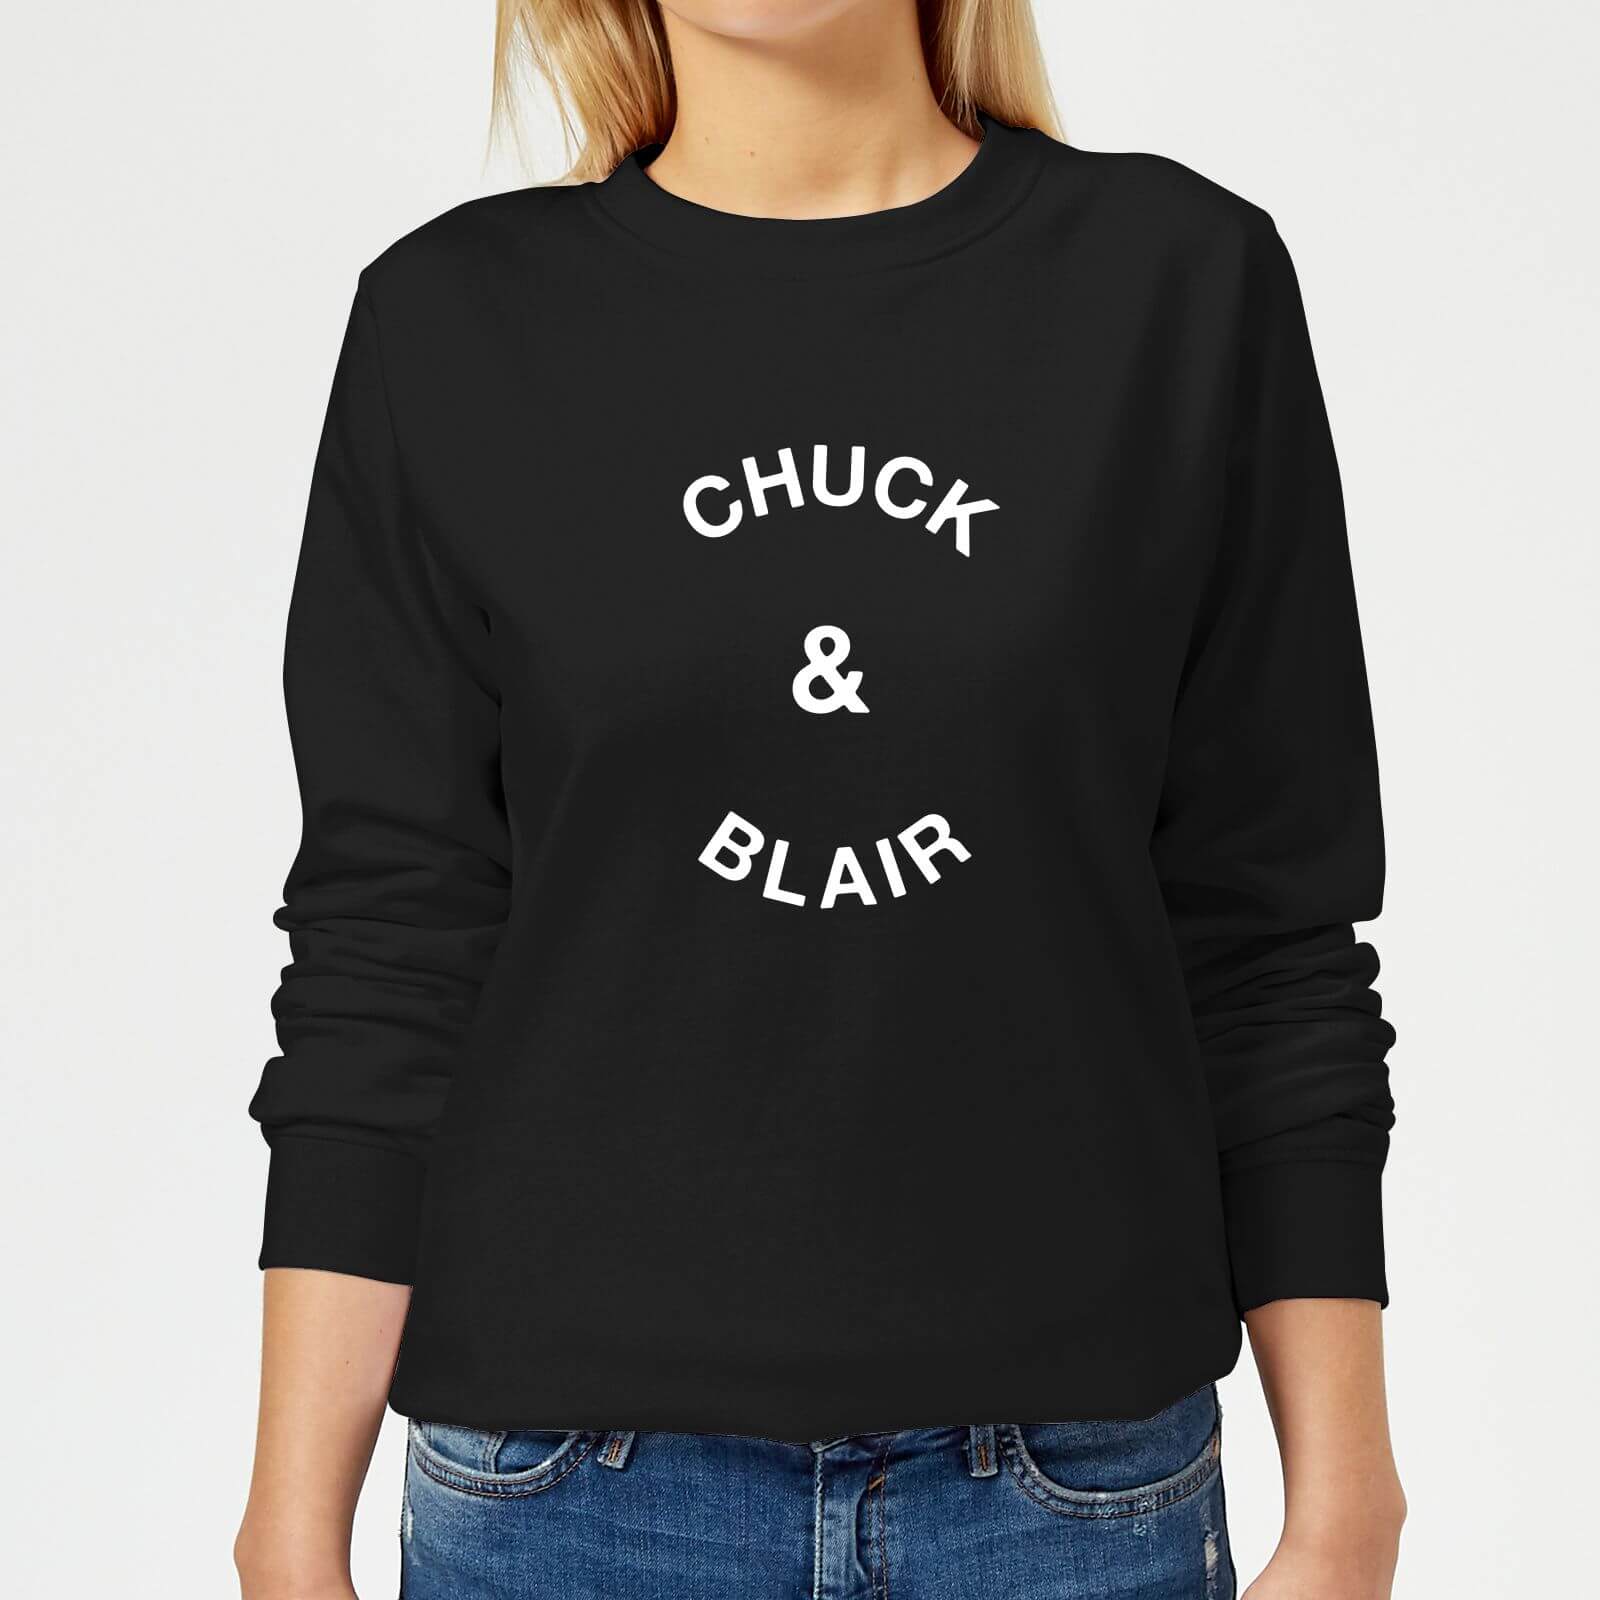 Chuck & Blair Women's Sweatshirt - Black - 5XL - Black